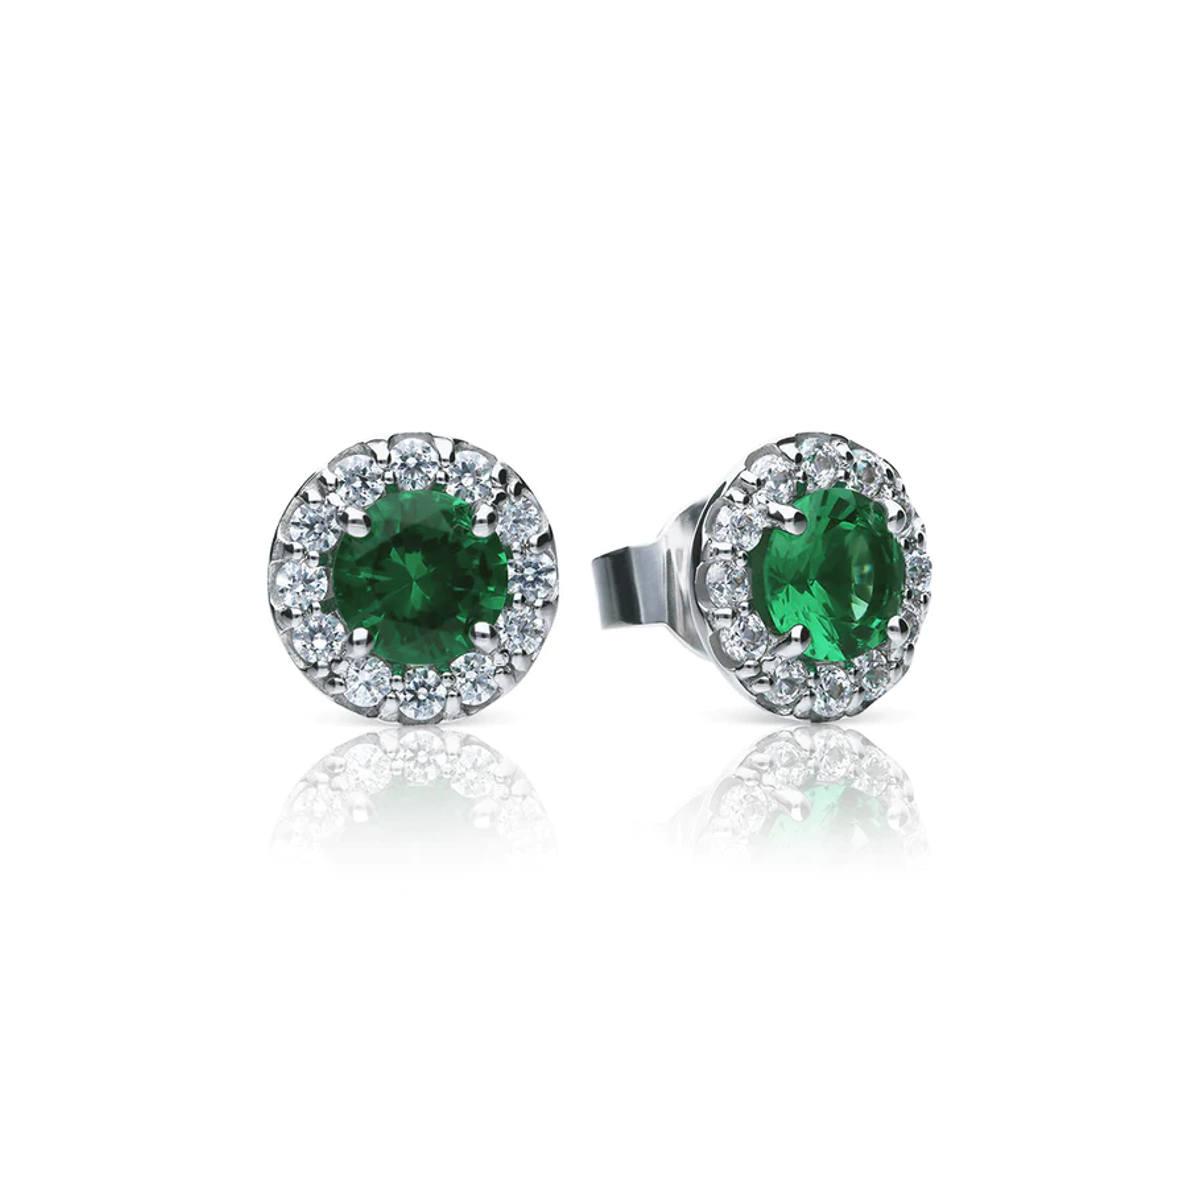 DIAMONFIRE earrings 6215581084